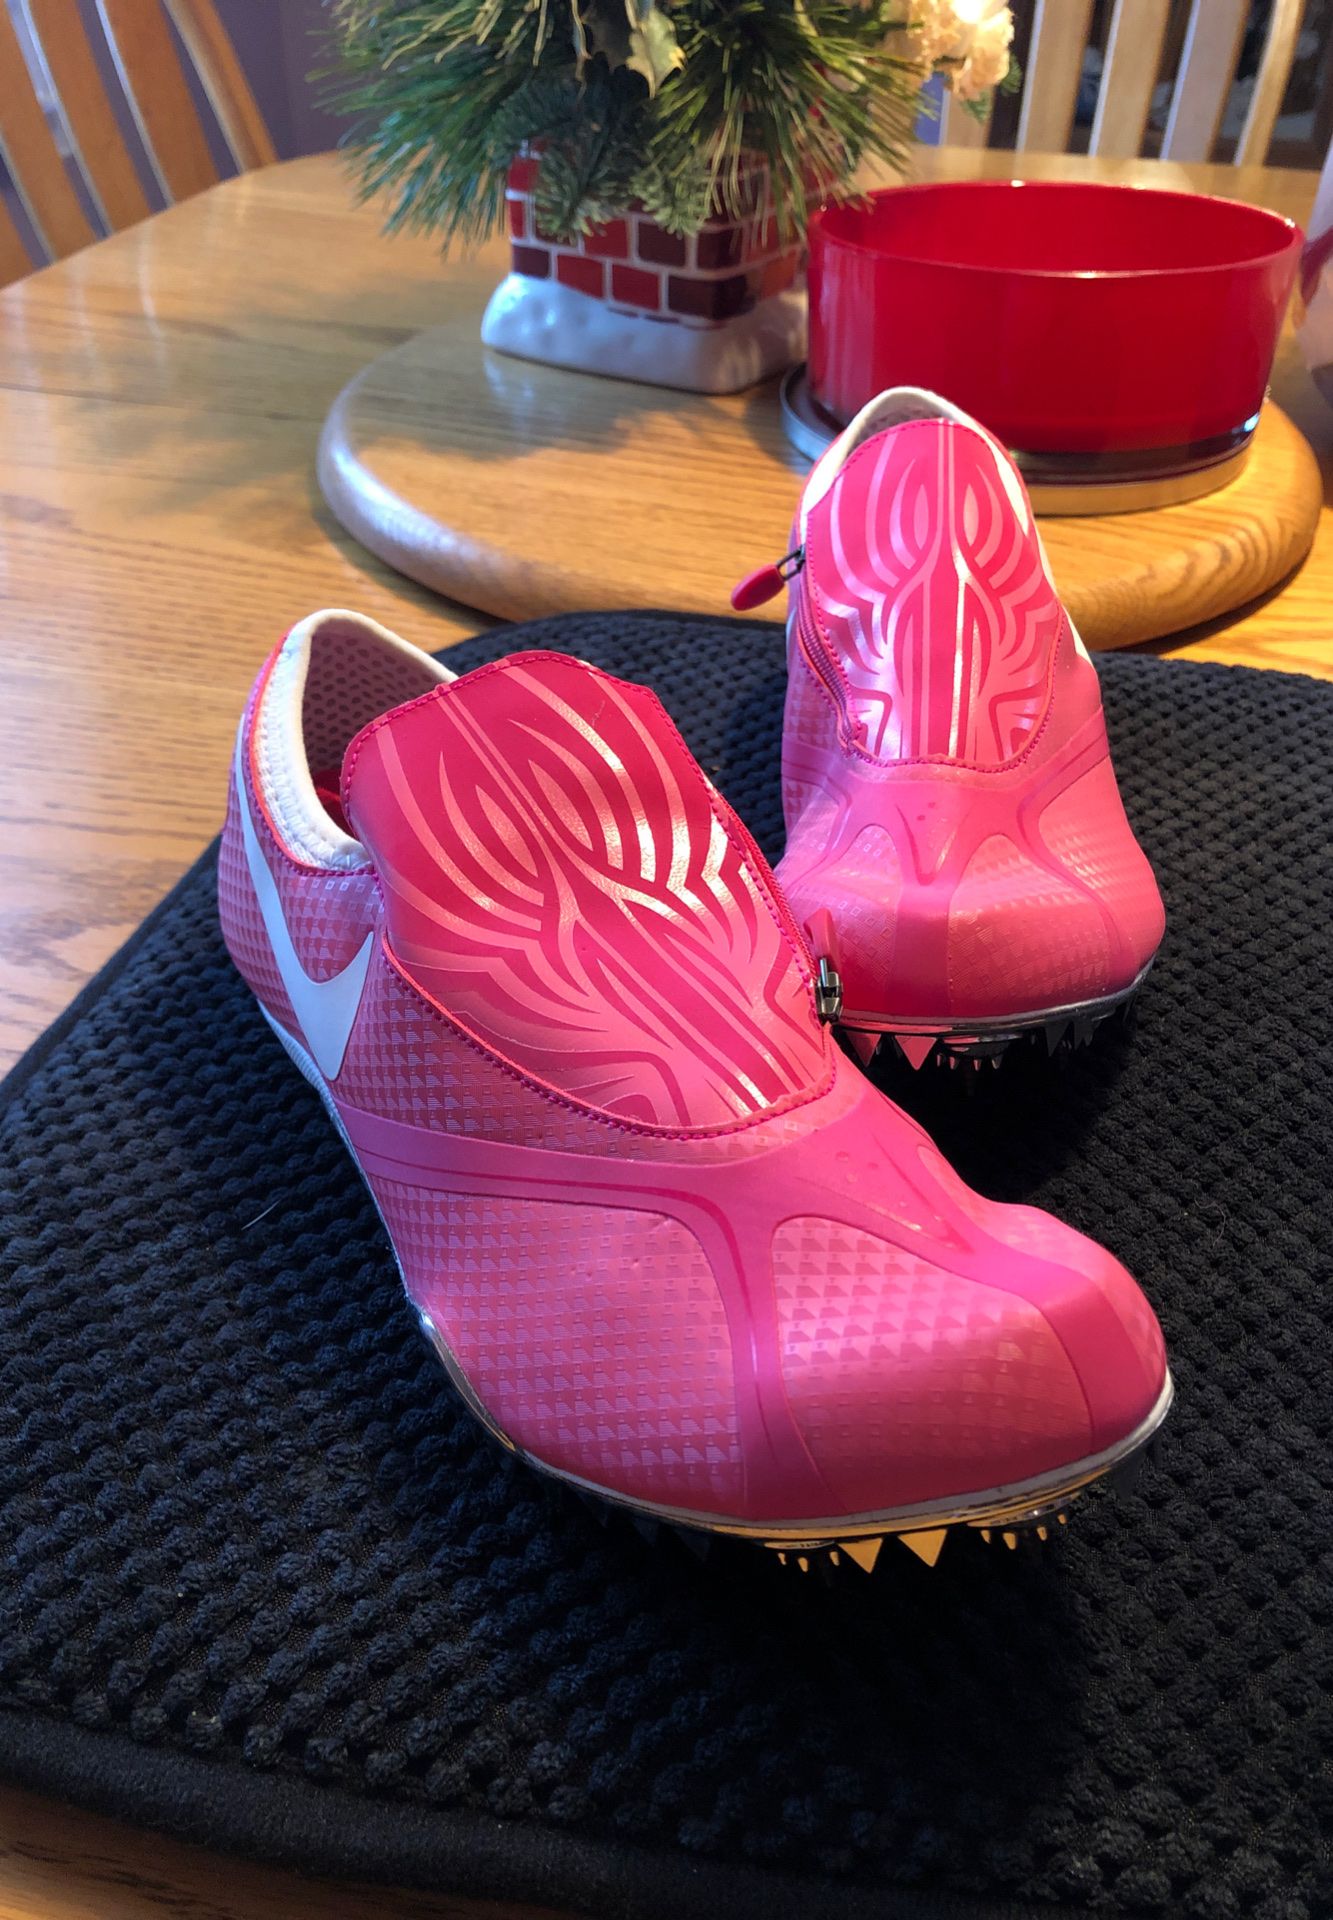 Nike Bowerman Series track and field women’s shoes